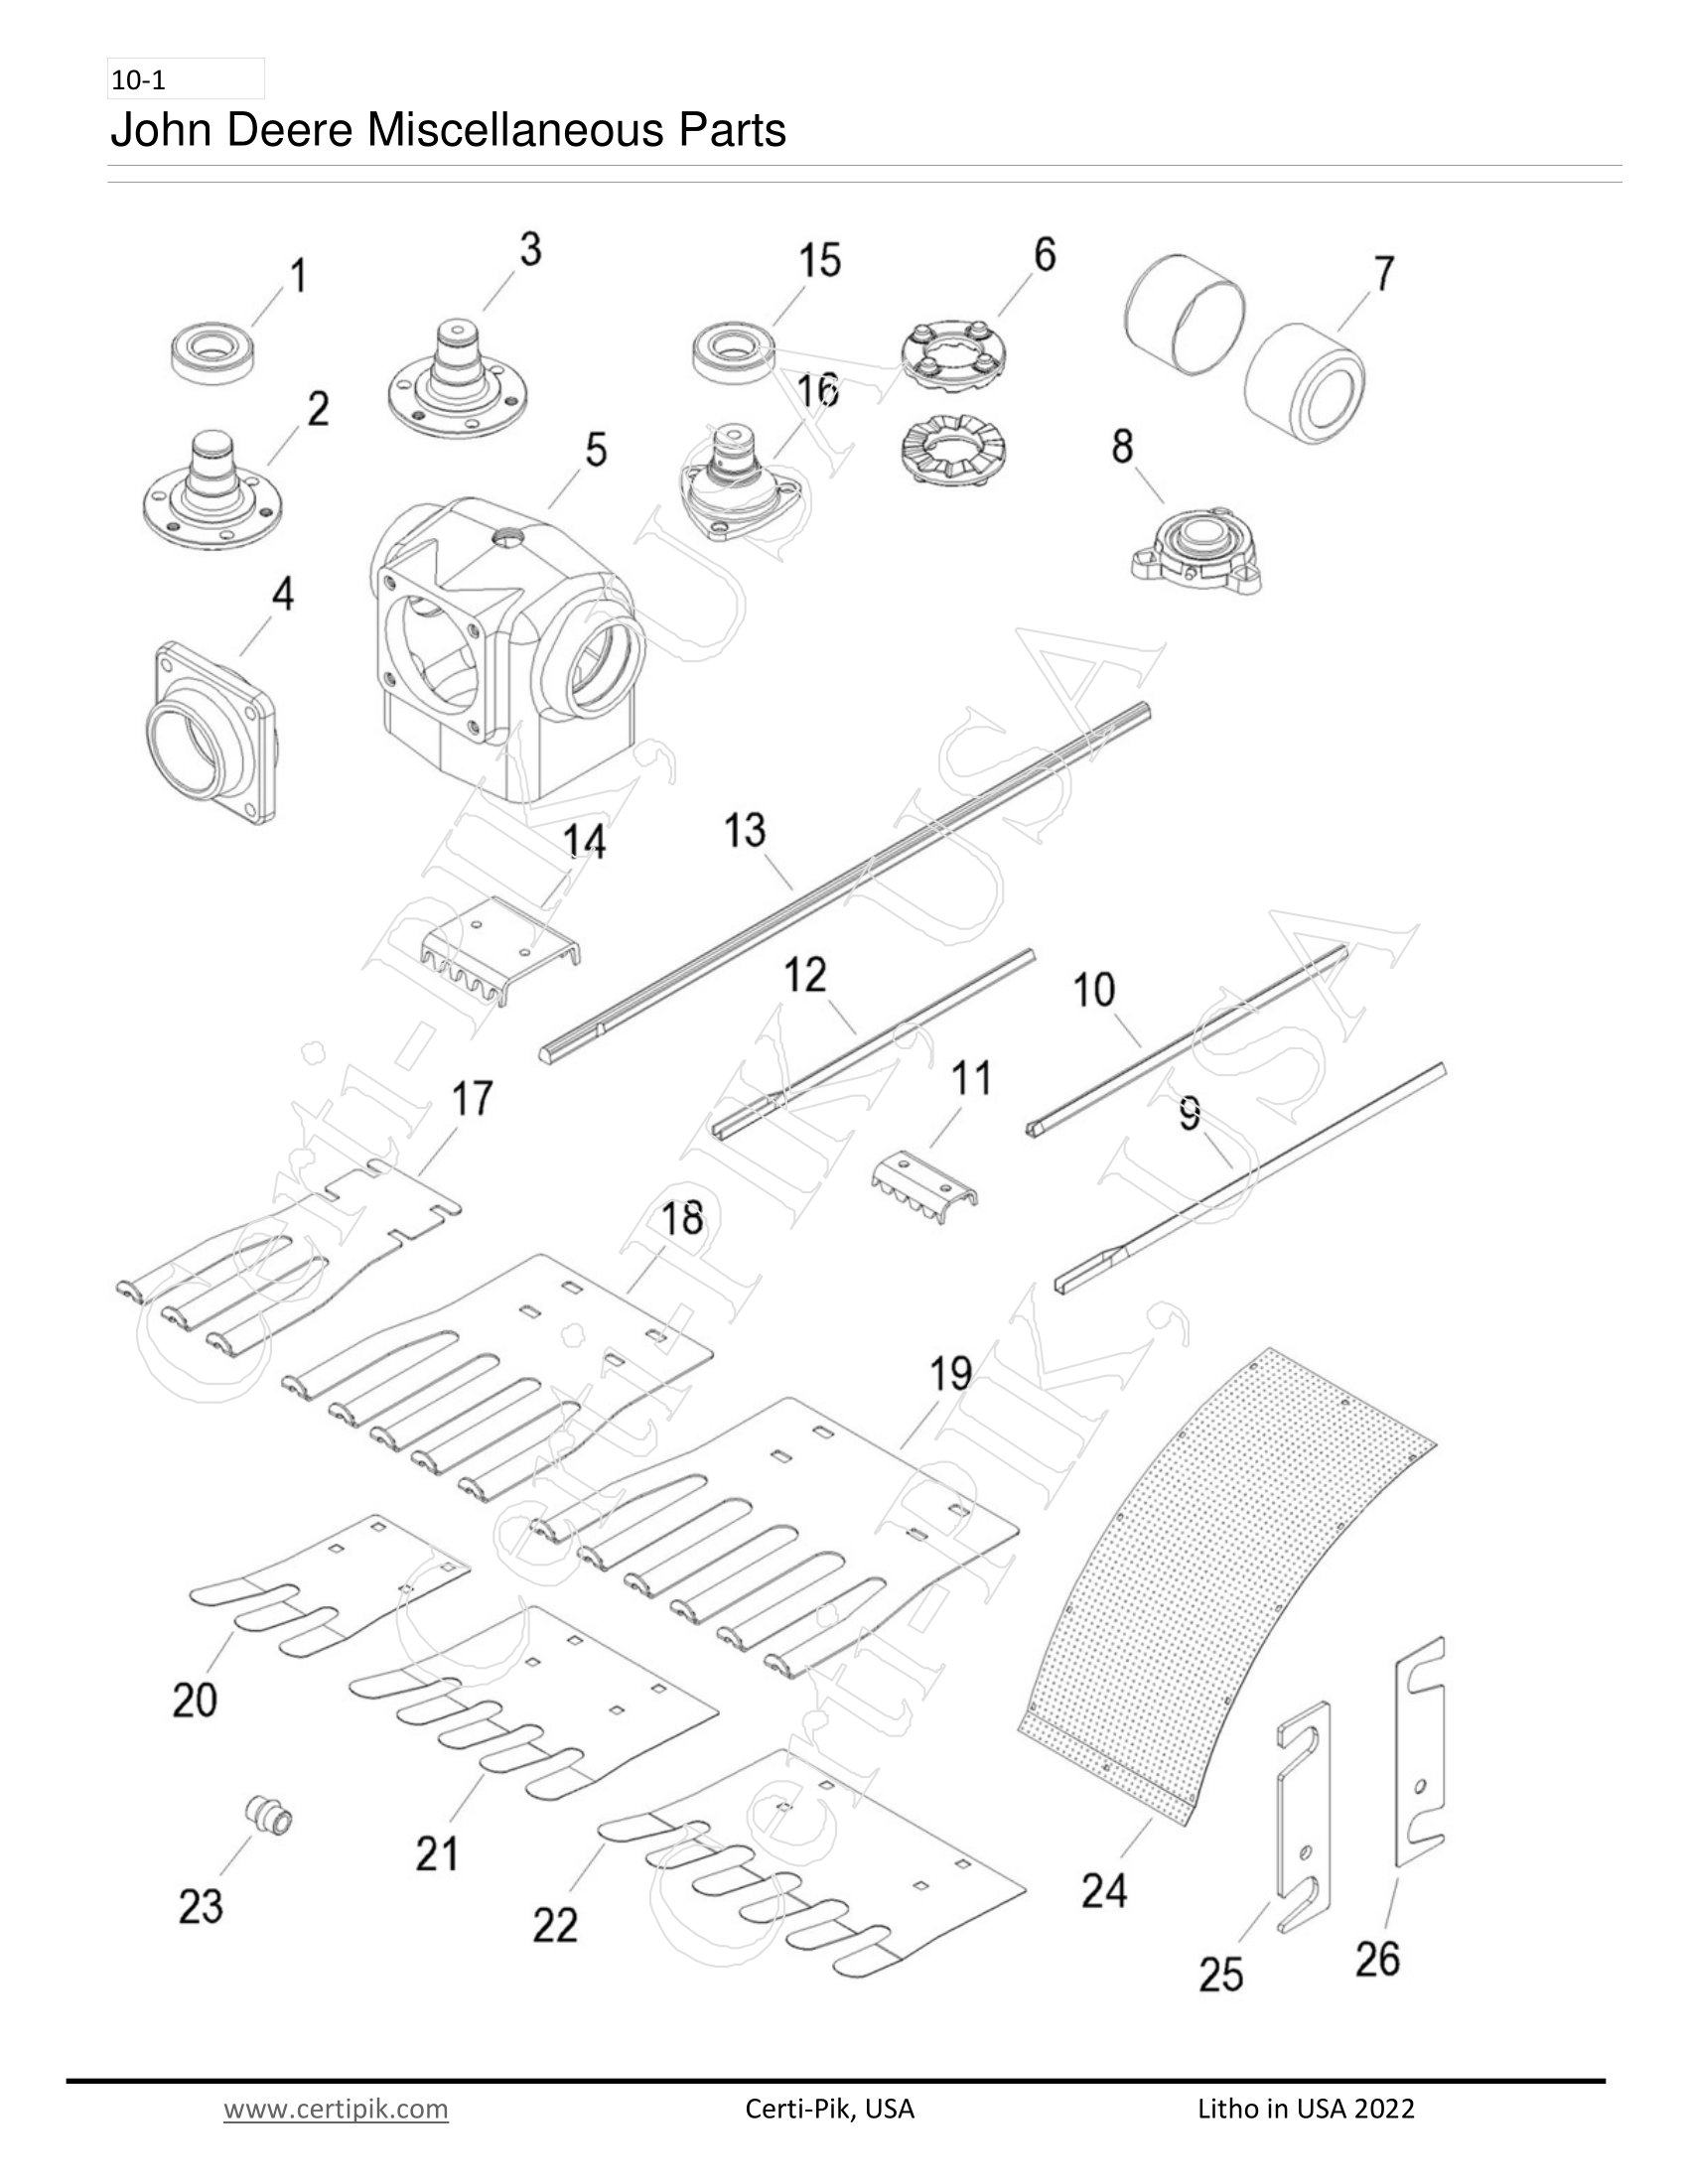 John Deere Miscellaneous Parts - Certi-Pik, USA